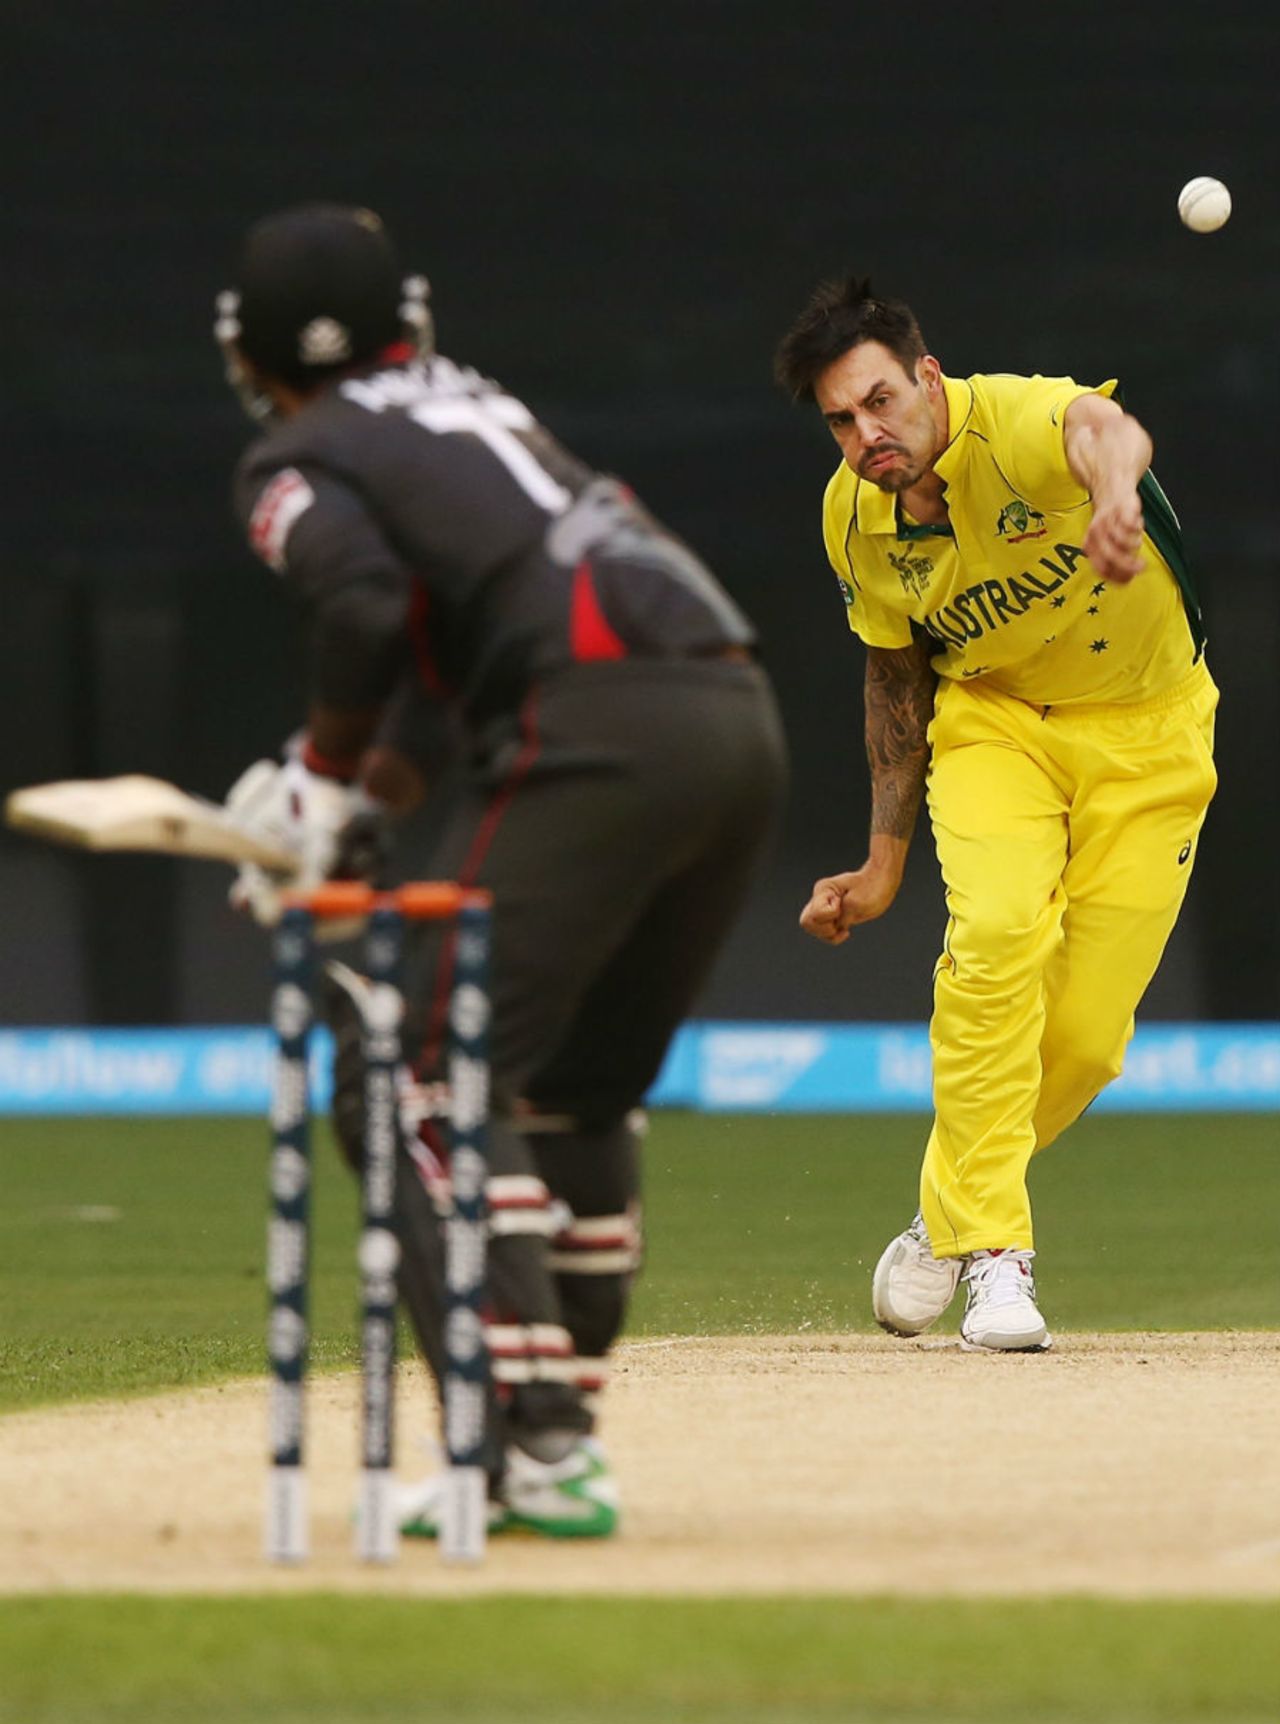 Mitchell Johnson bowls to Amjad Ali, Australia v UAE, World Cup warm-up, Melbourne, February 11, 2015